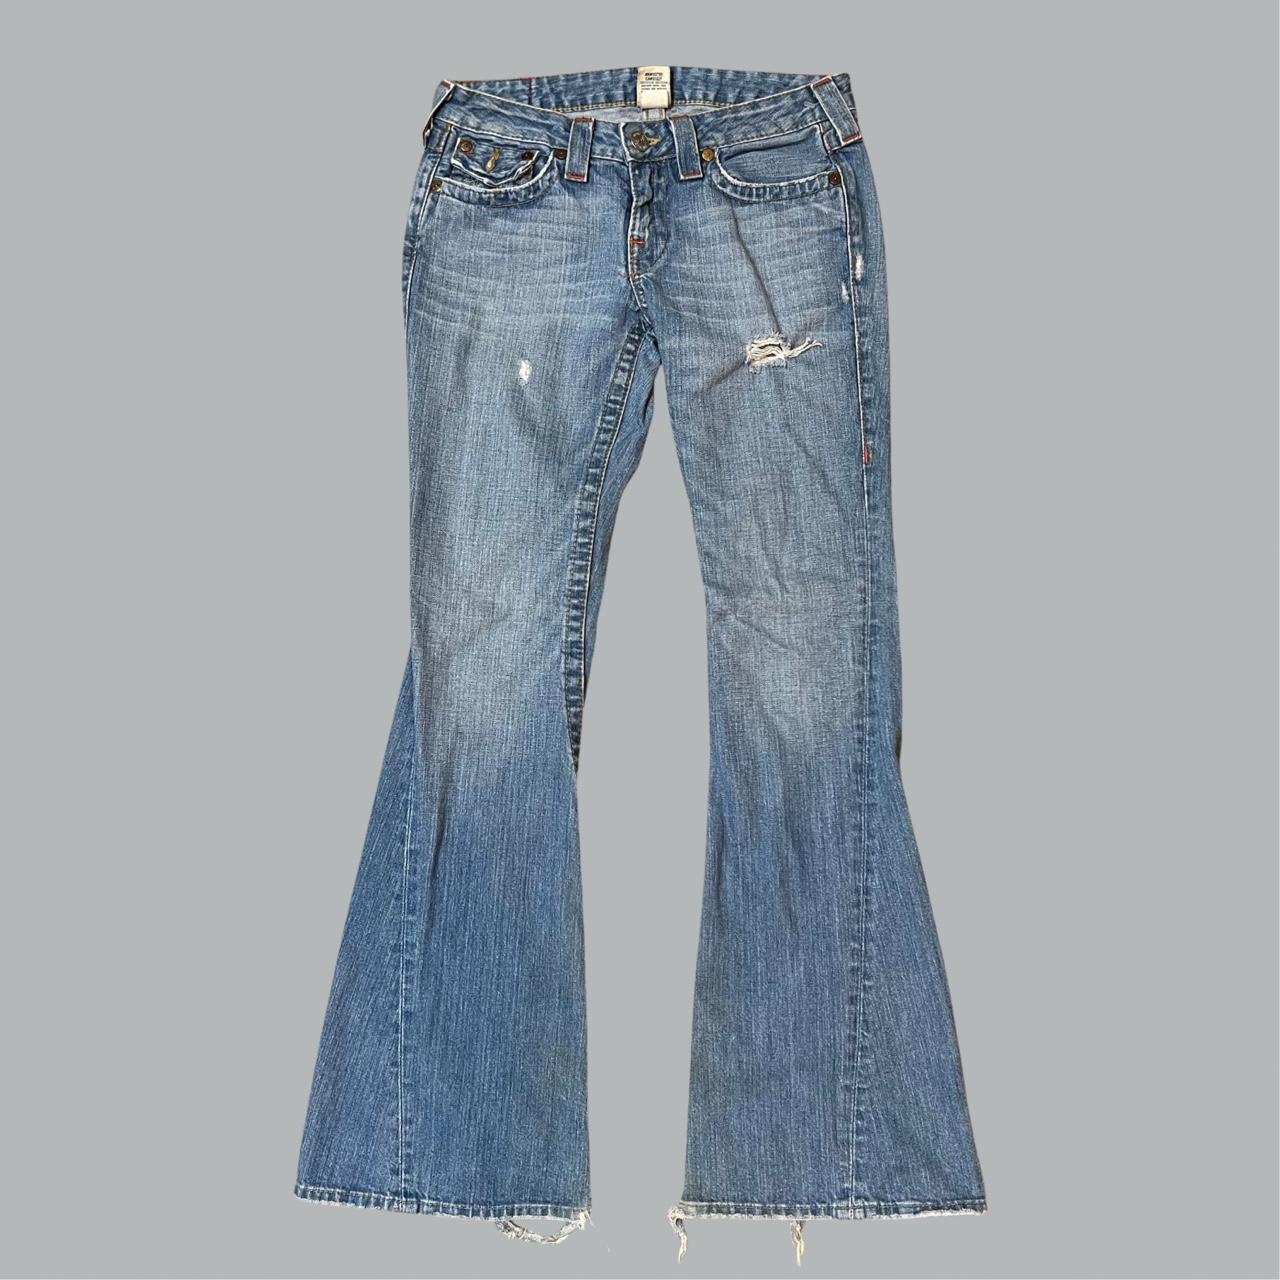 True Religion Denim Jeans #truereligion #denim #jeans - Depop